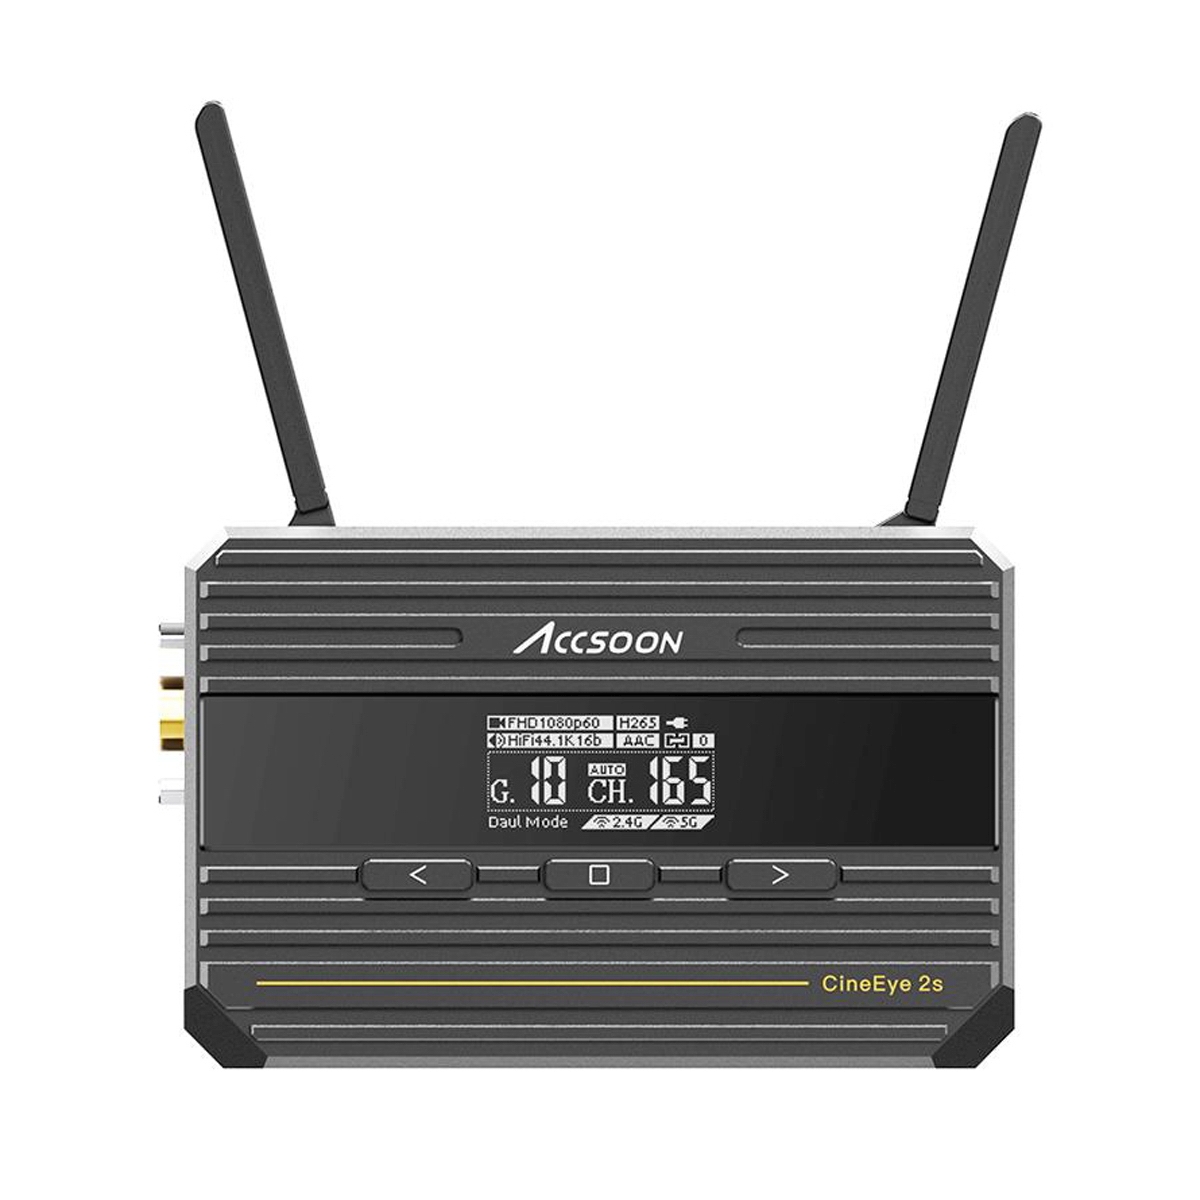 Accsoon Cineeye 2 S Wireless Video Transmitter